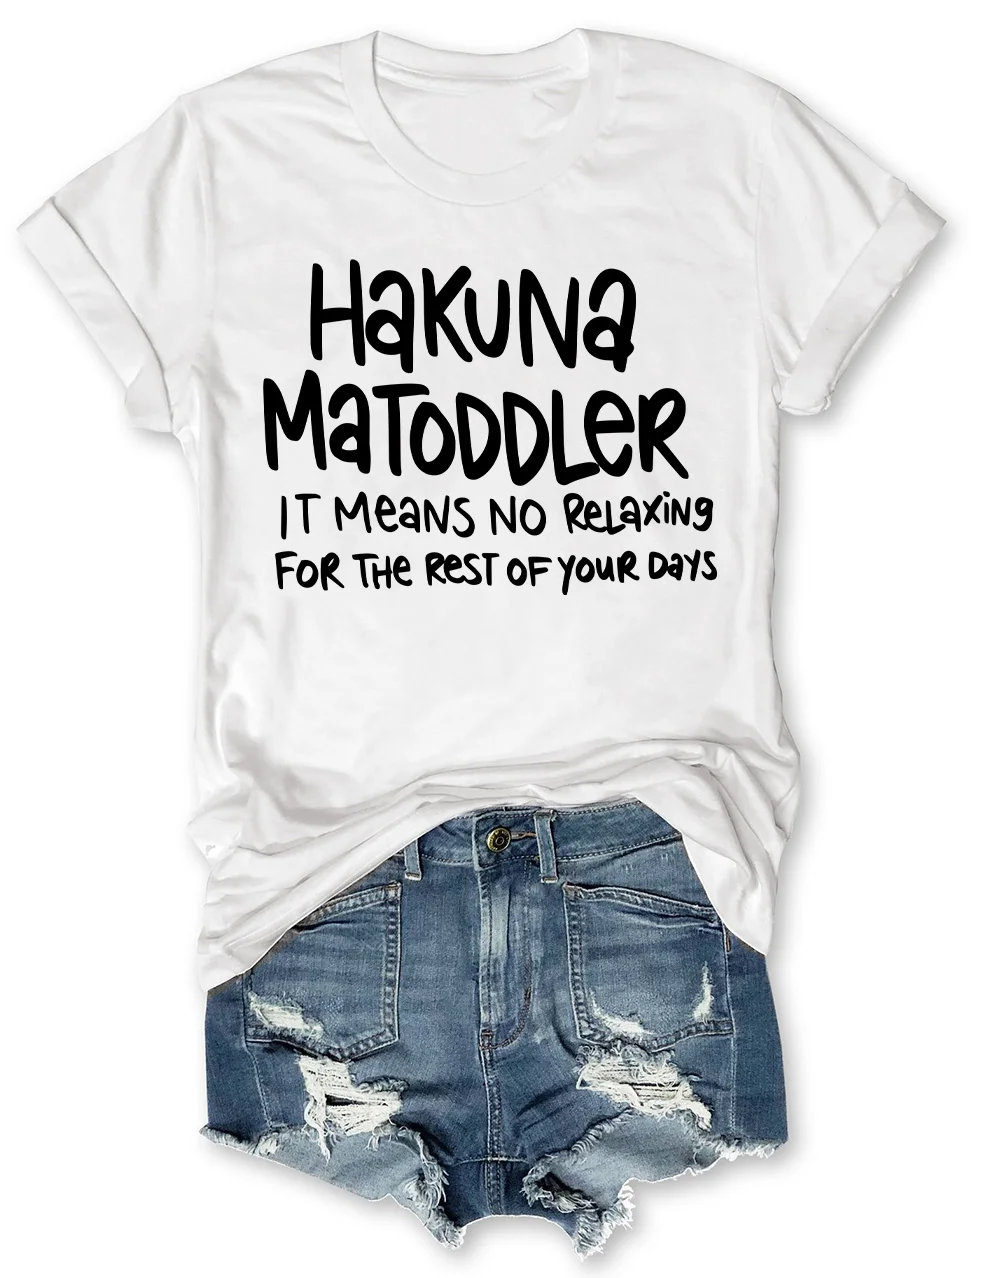 Hakuna Matoddler Funny Mom T-Shirt